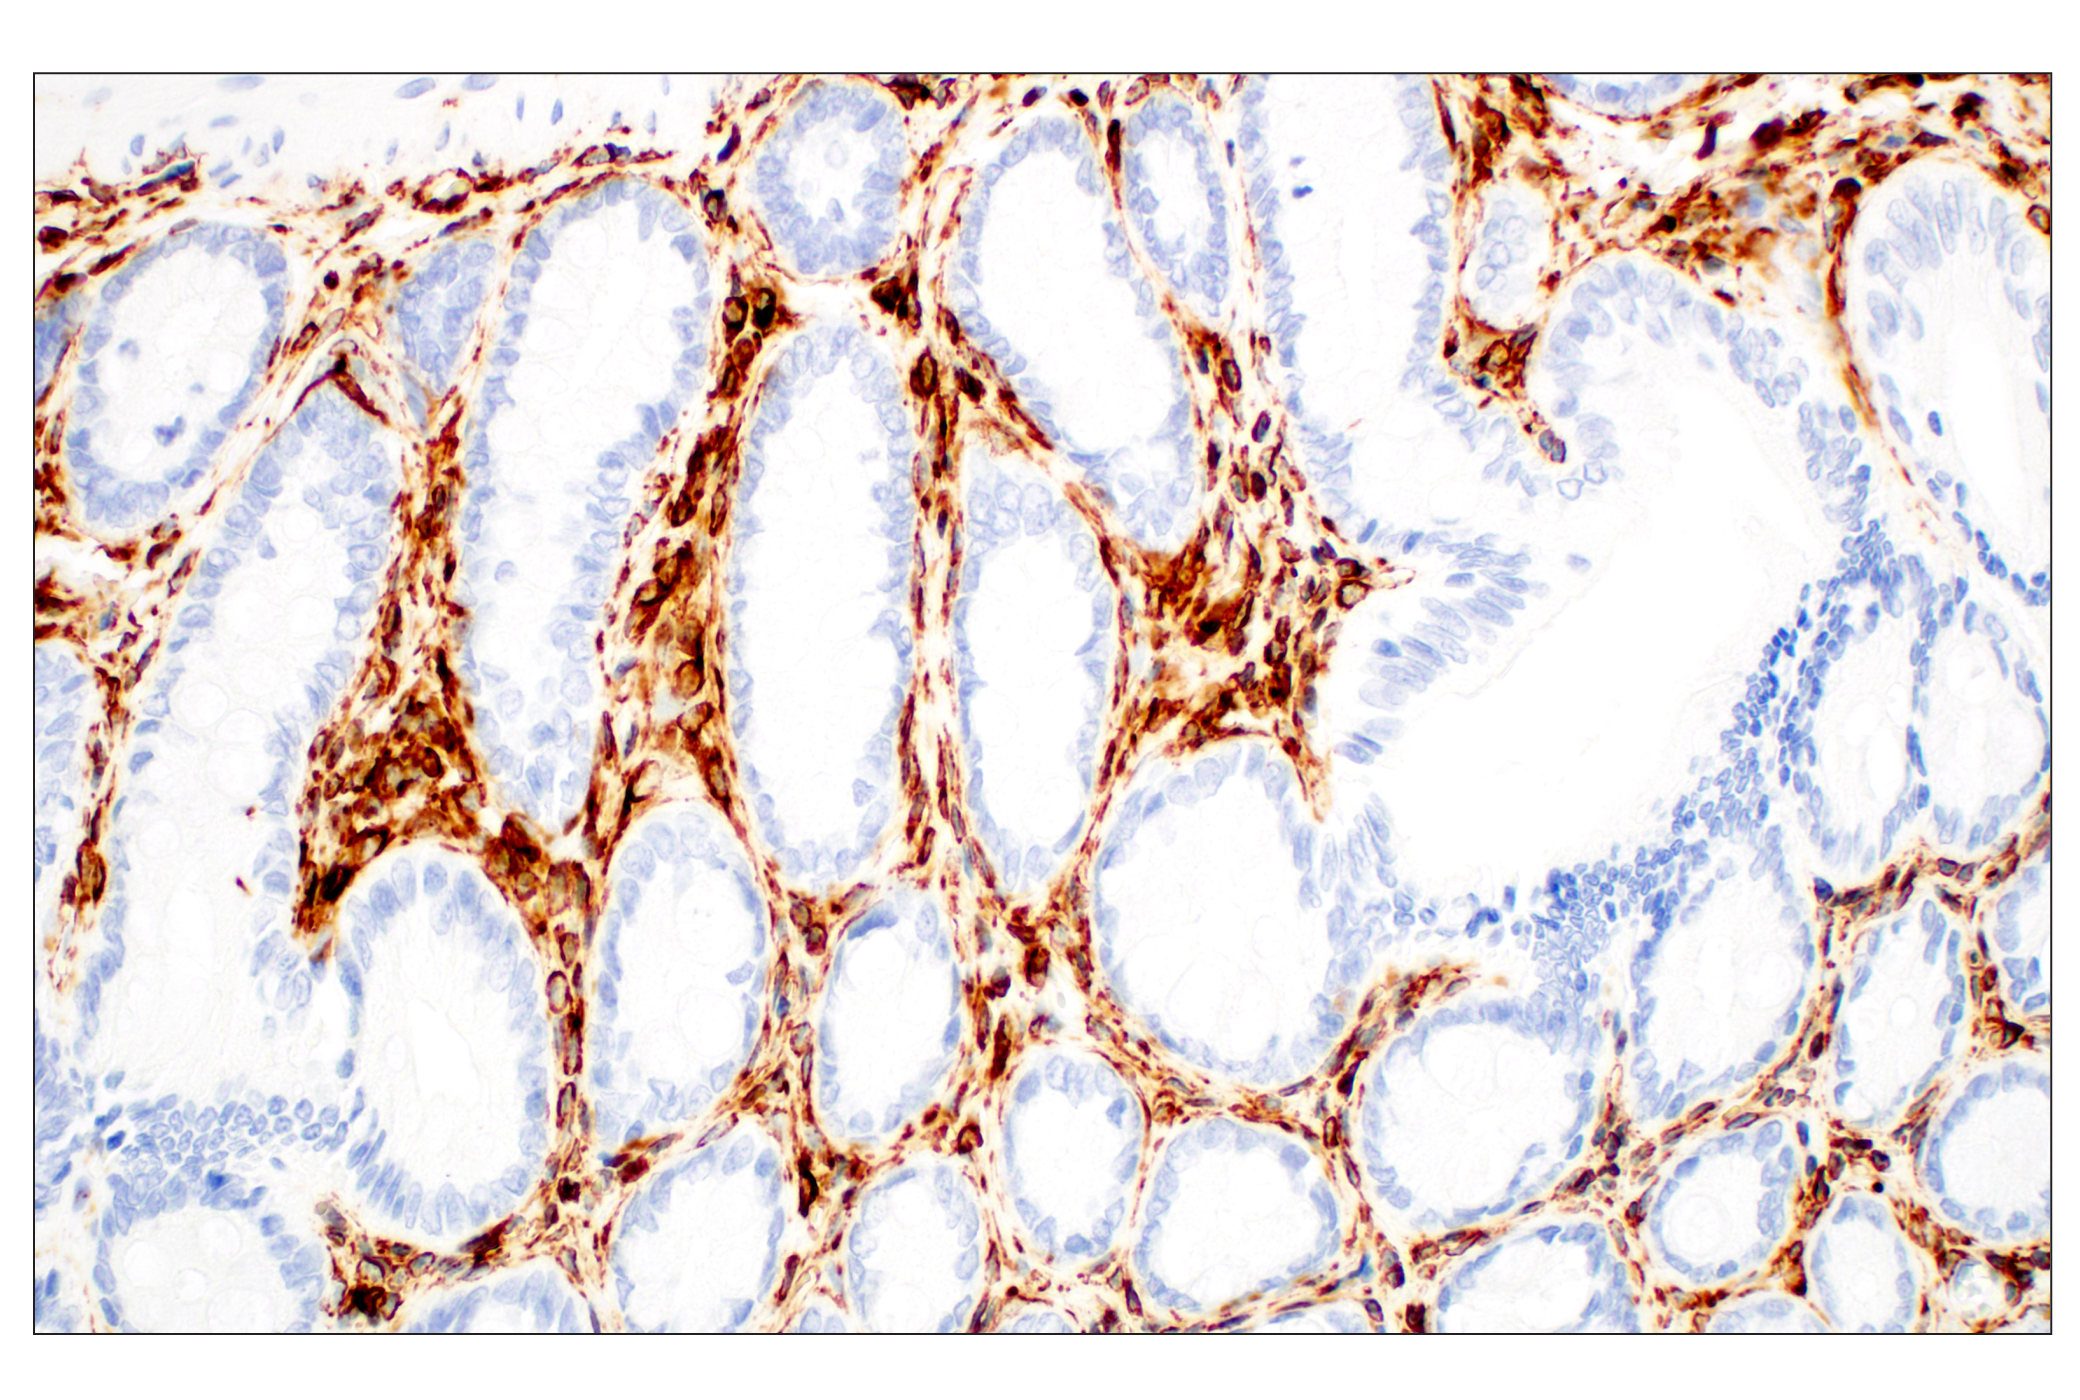  Image 44: Epithelial-Mesenchymal Transition (EMT) IF Antibody Sampler Kit